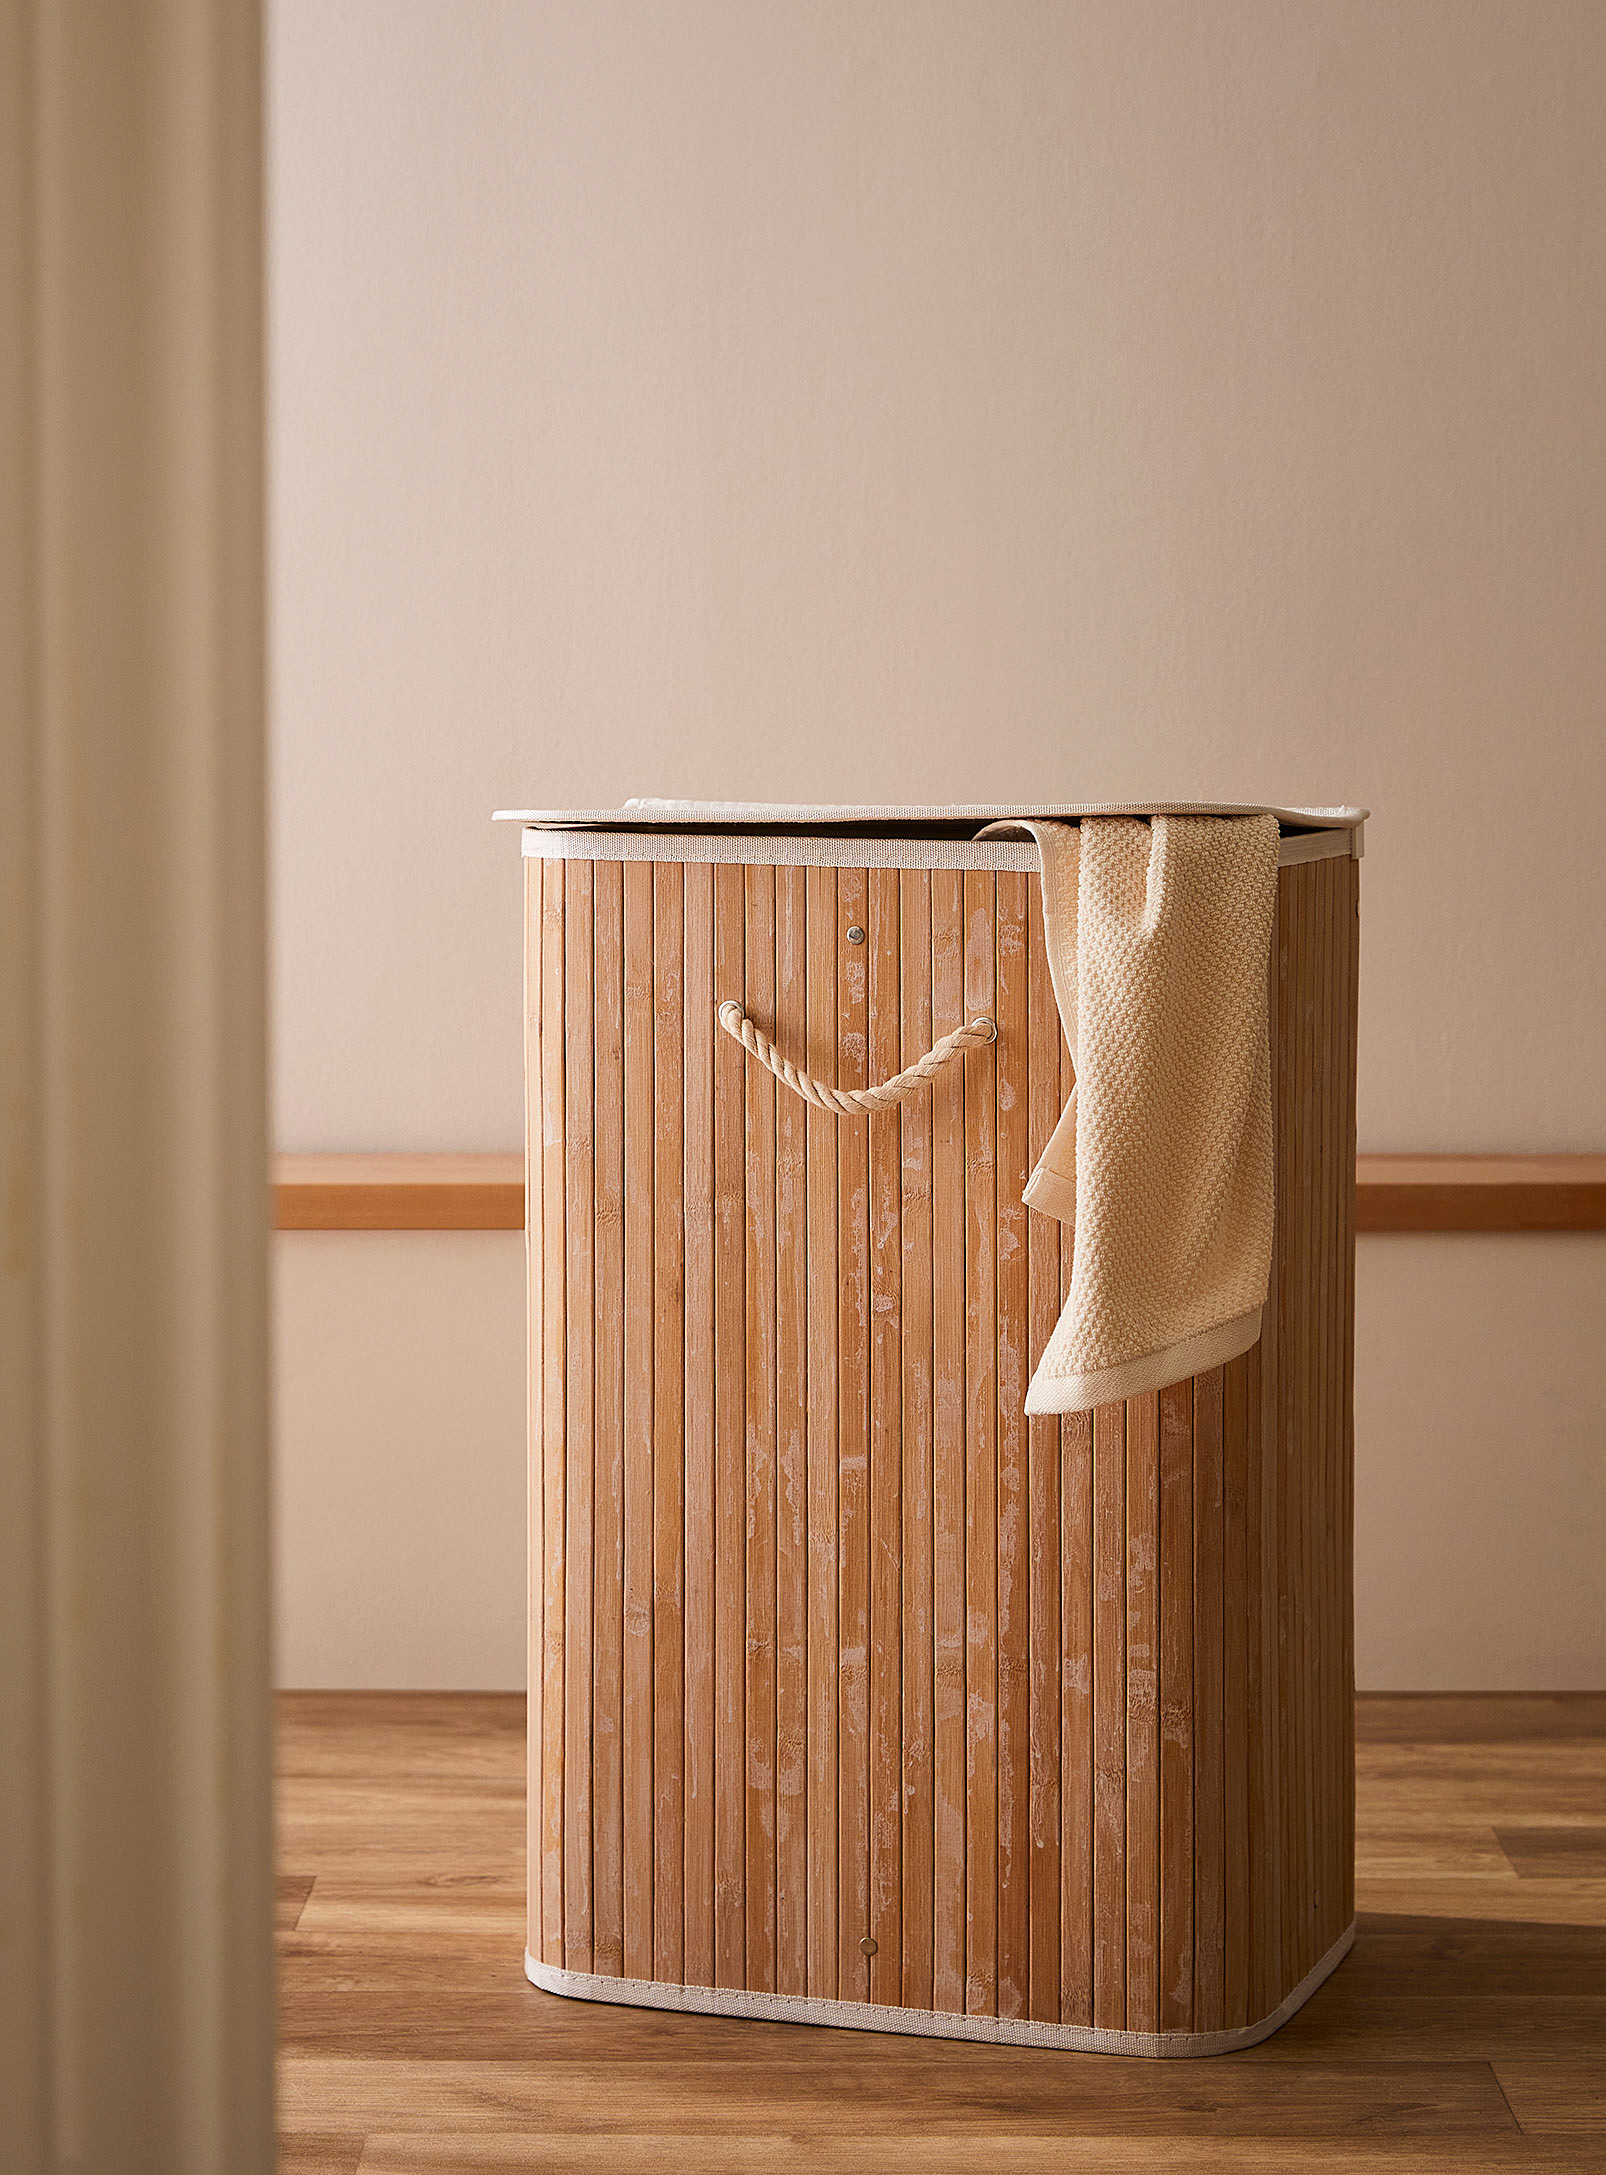 Simons Maison Rectangular Bamboo Laundry Basket In White